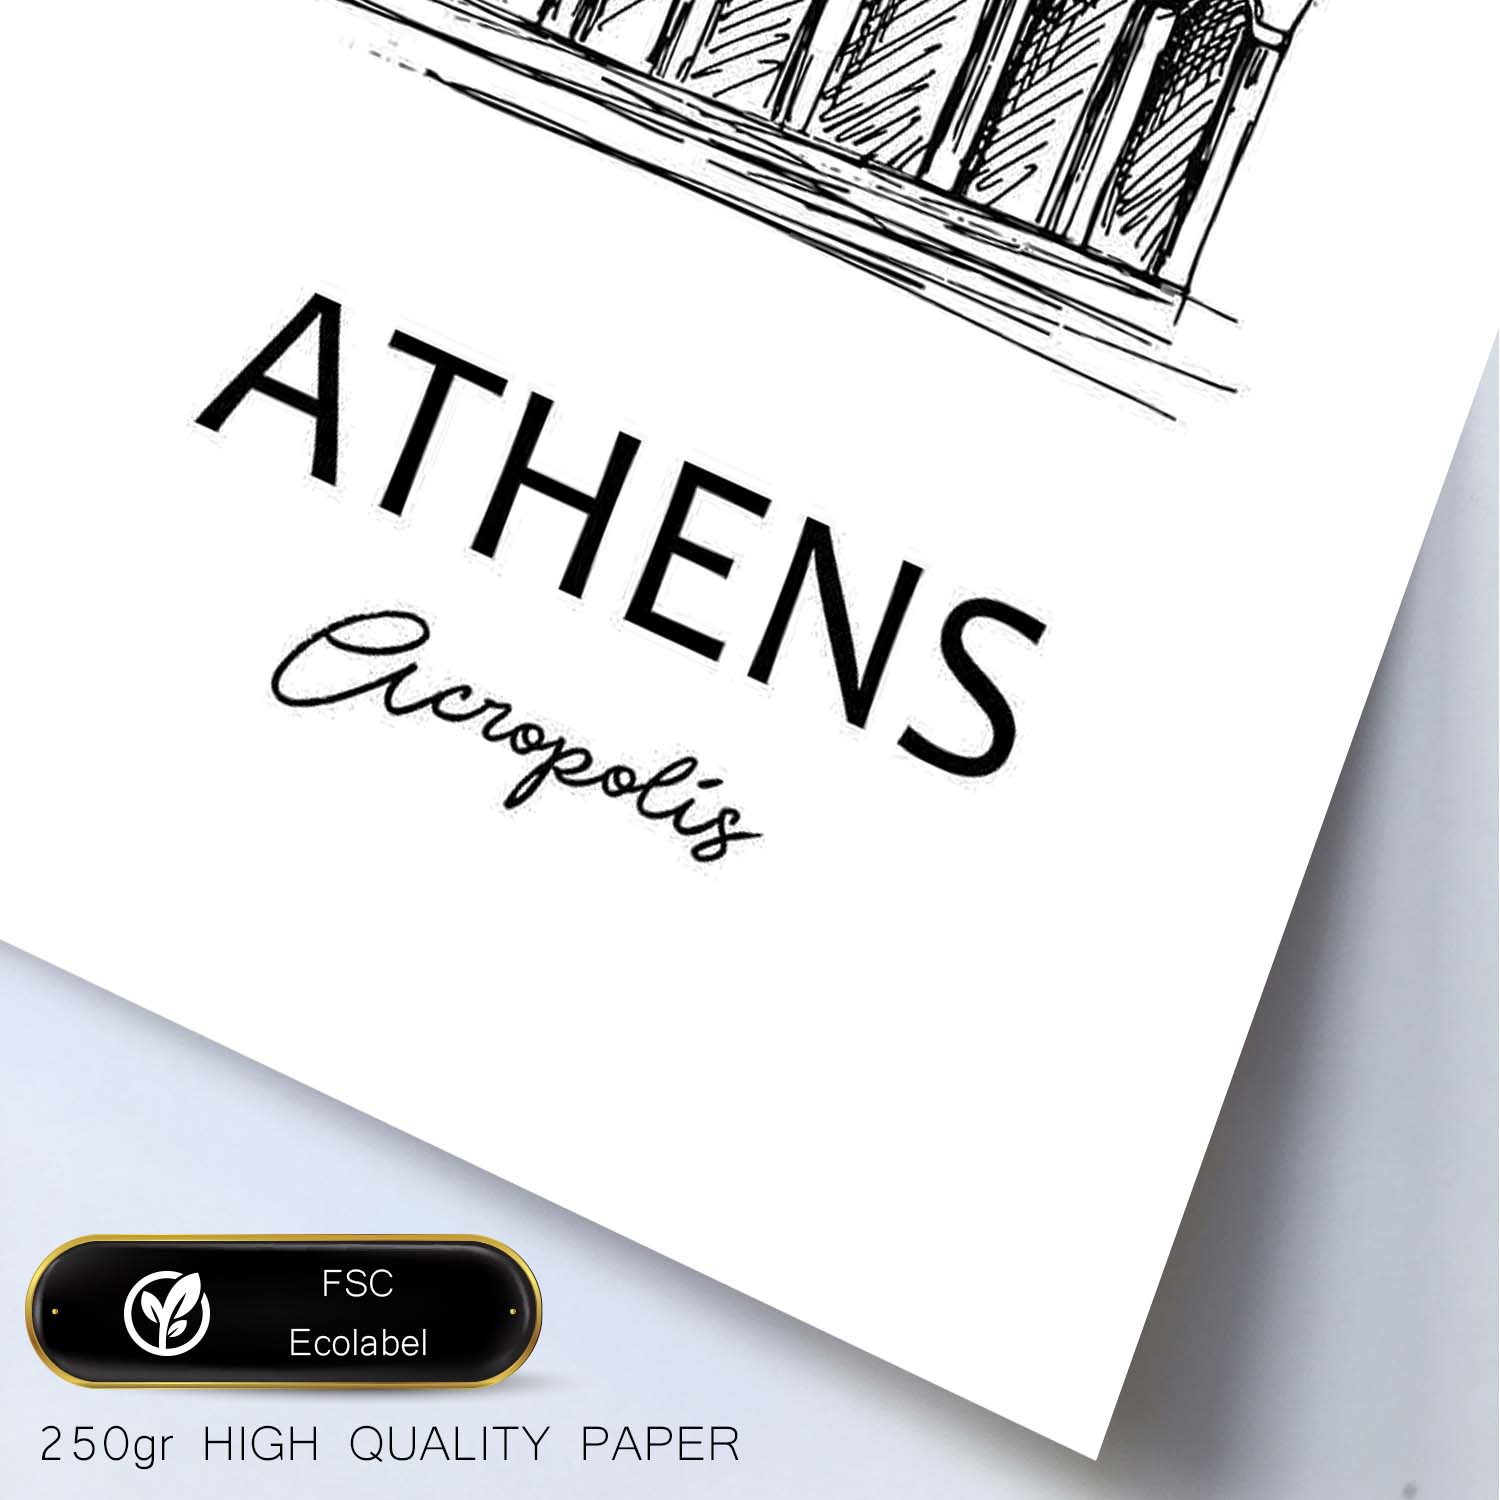 Poster de Atenas - Acropolis. Láminas con monumentos de ciudades.-Artwork-Nacnic-Nacnic Estudio SL